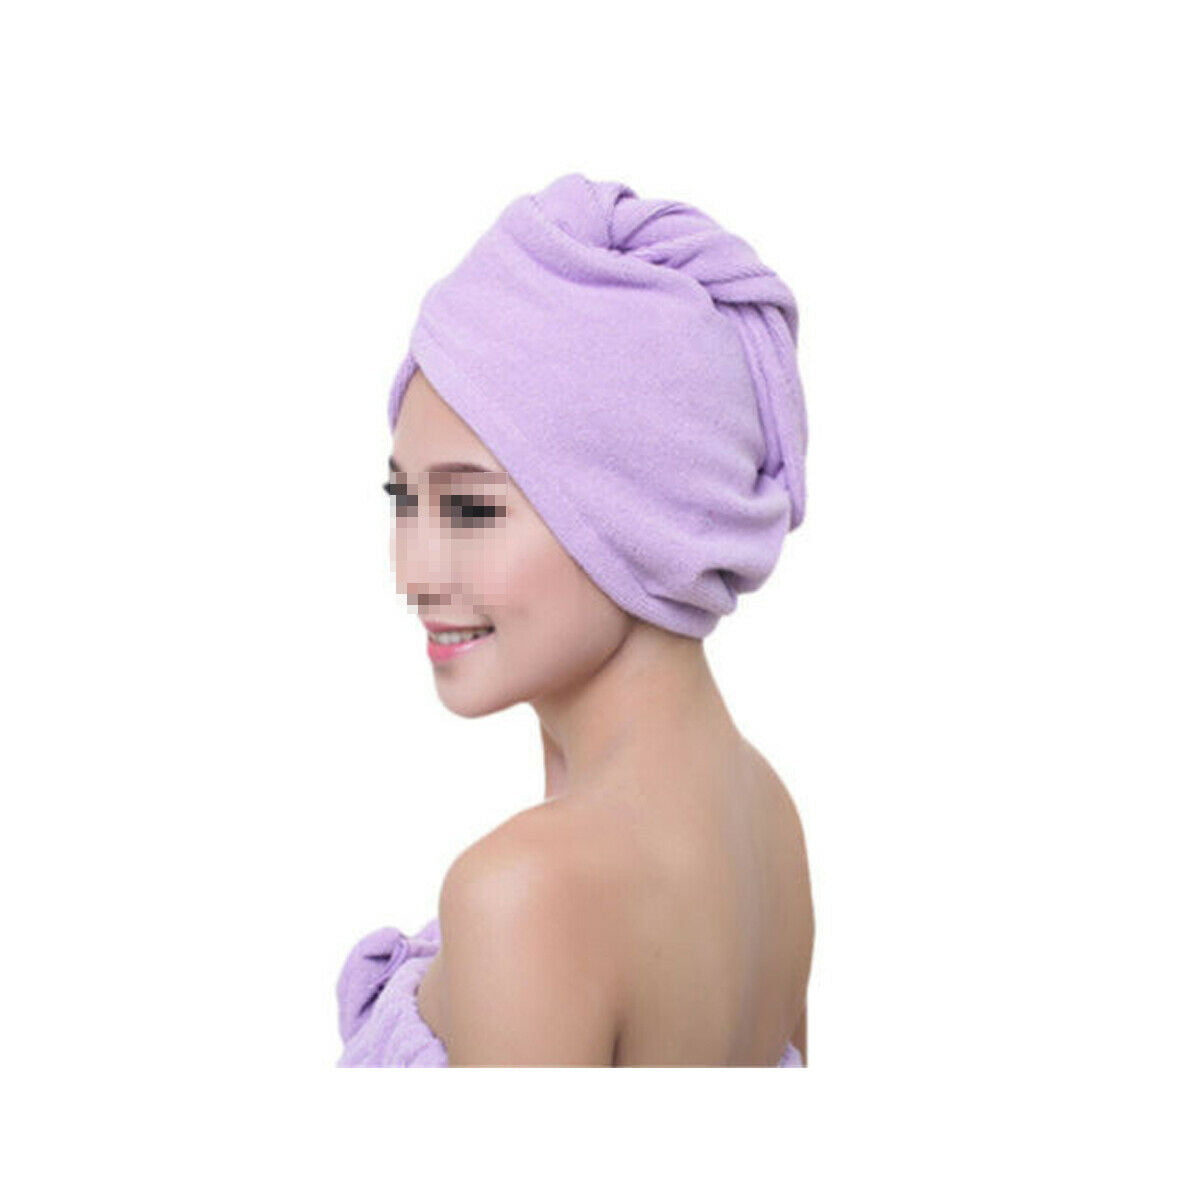 2PCS Rapid Fast Drying Hair Absorbent Towel Turban Wrap Soft Shower Bath Cap Hat 